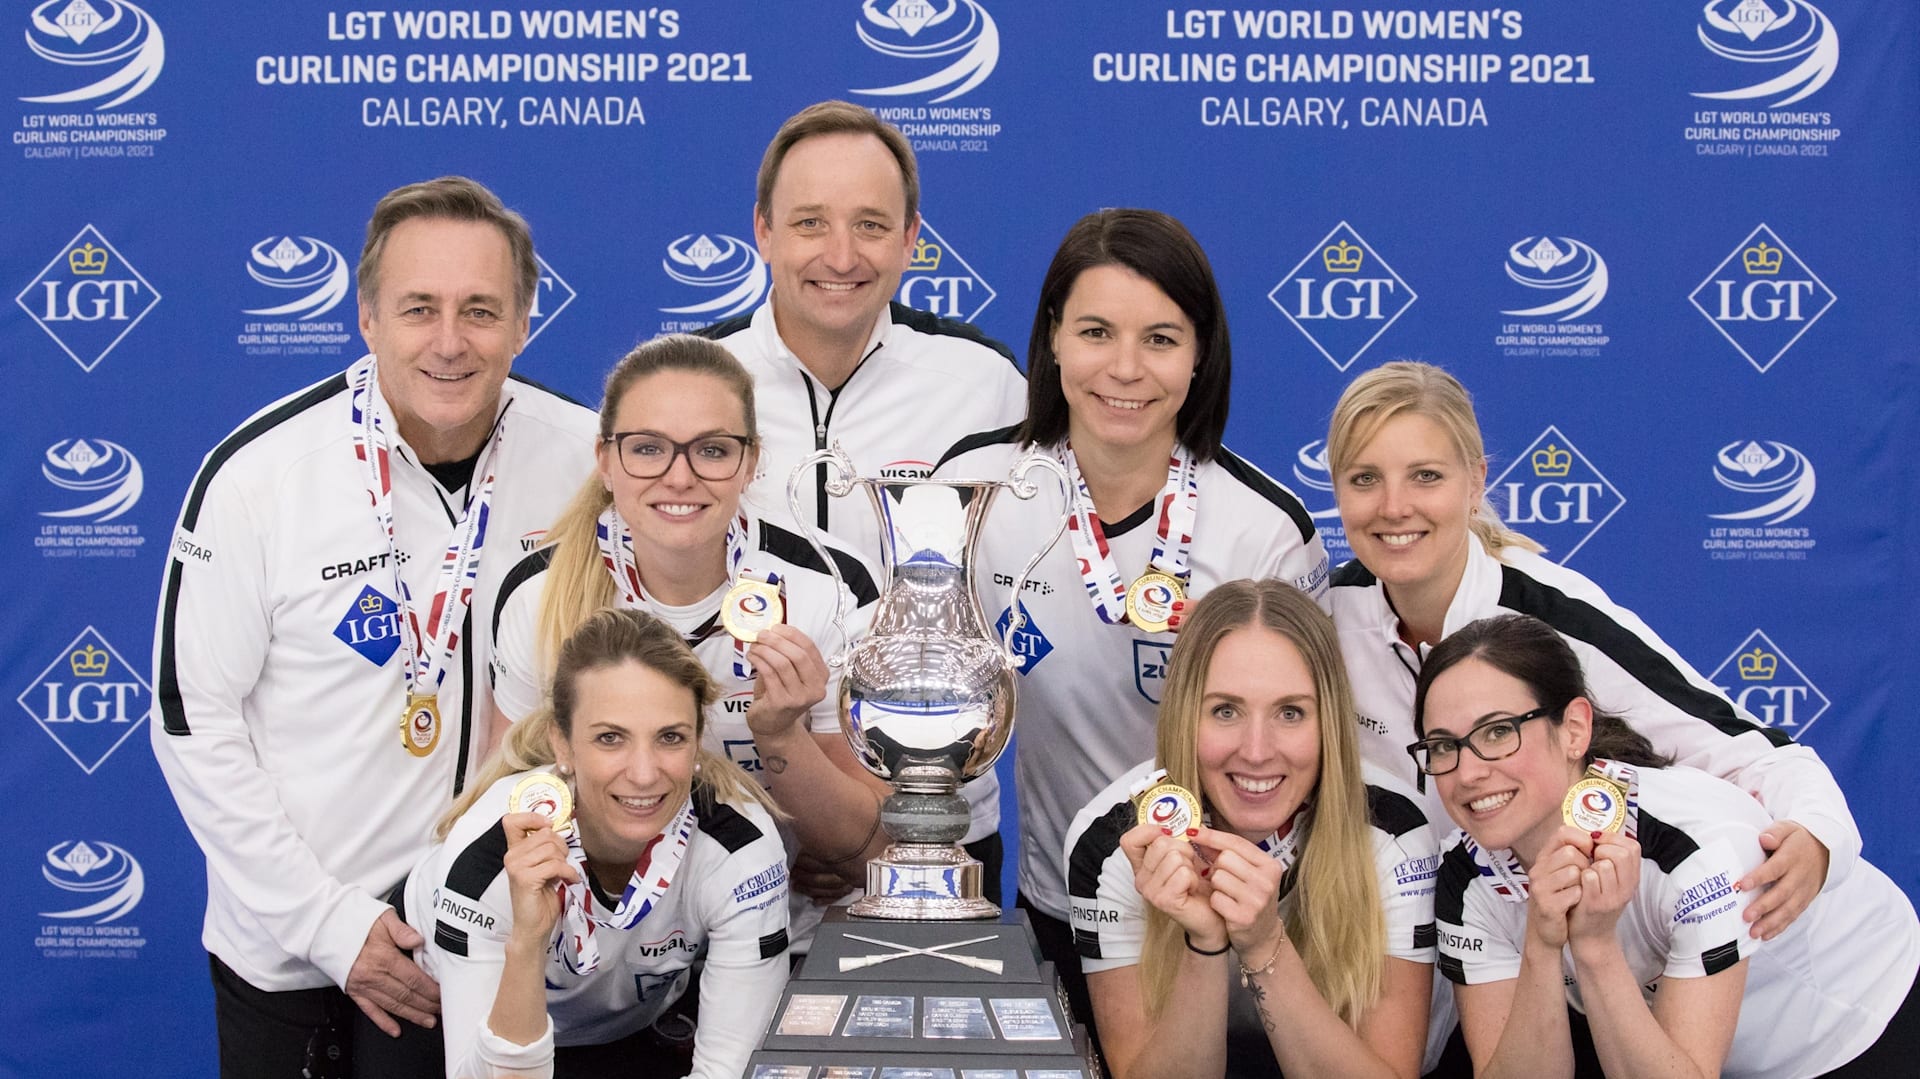 2021 World Women's Team Championship: All The Information 